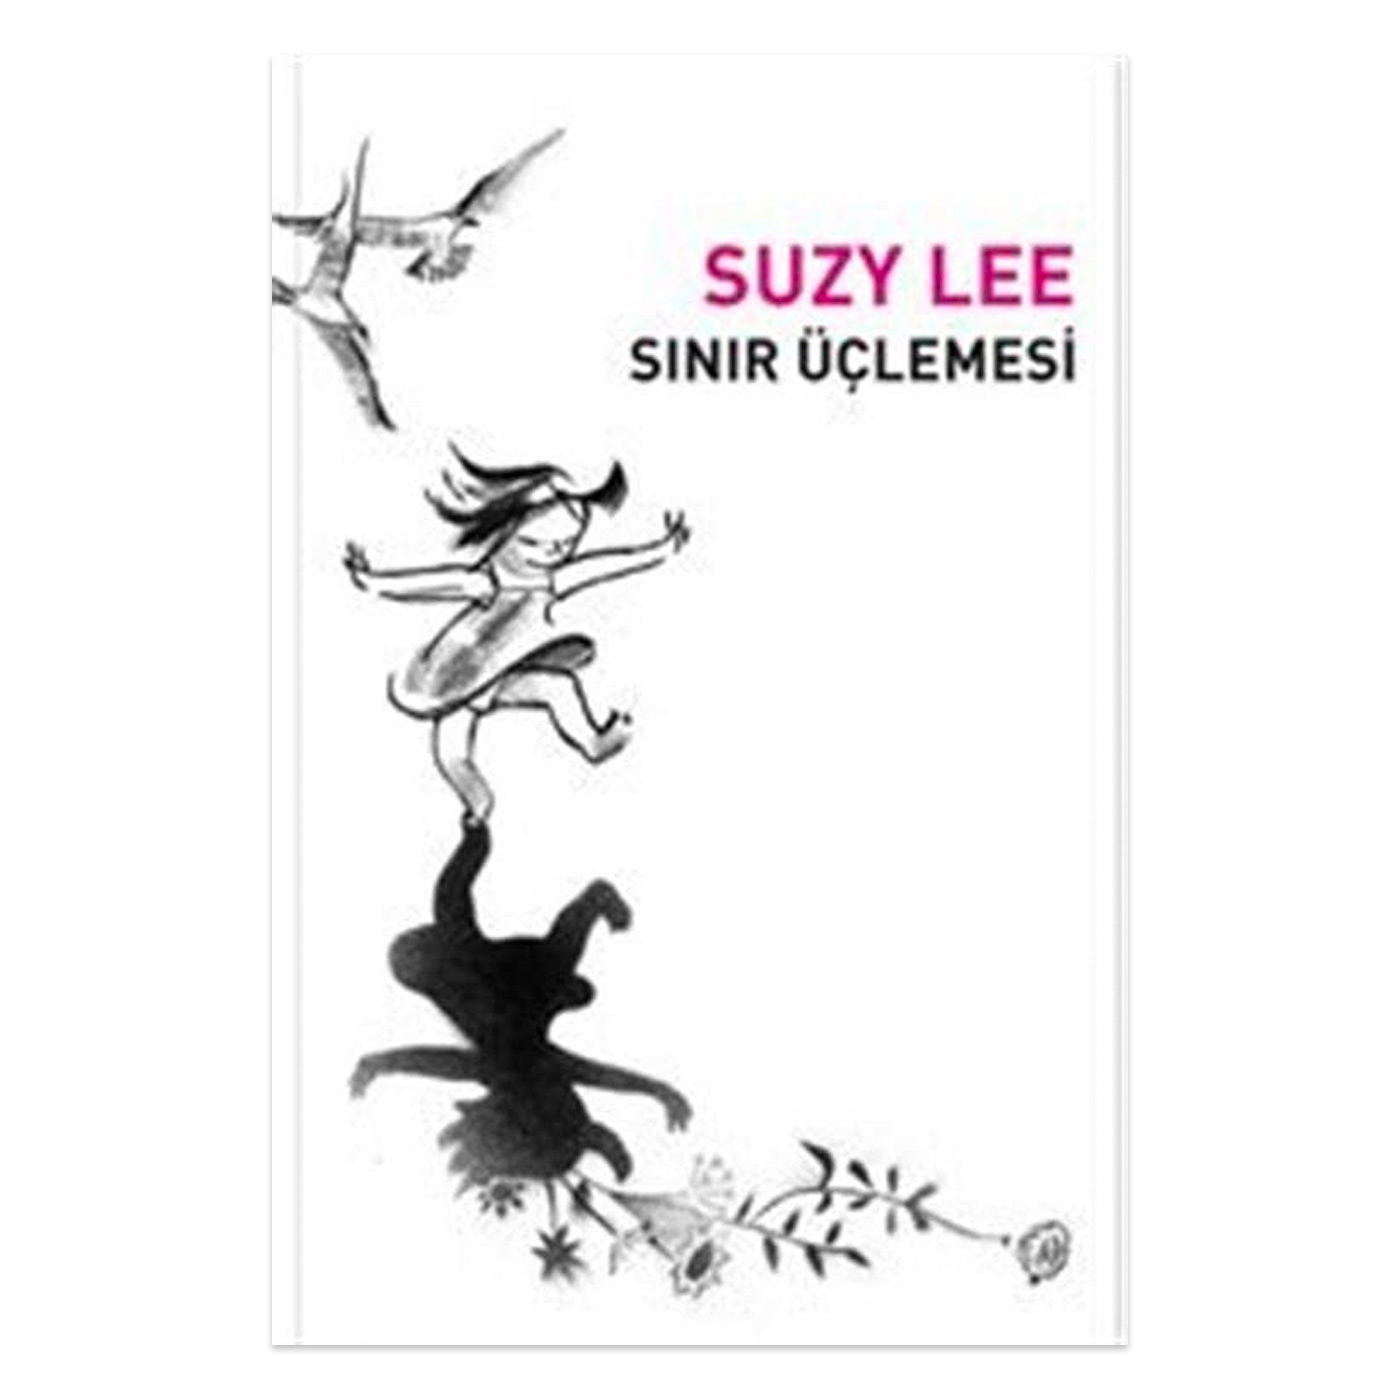  Suzy Lee Sınır Üçlemesi